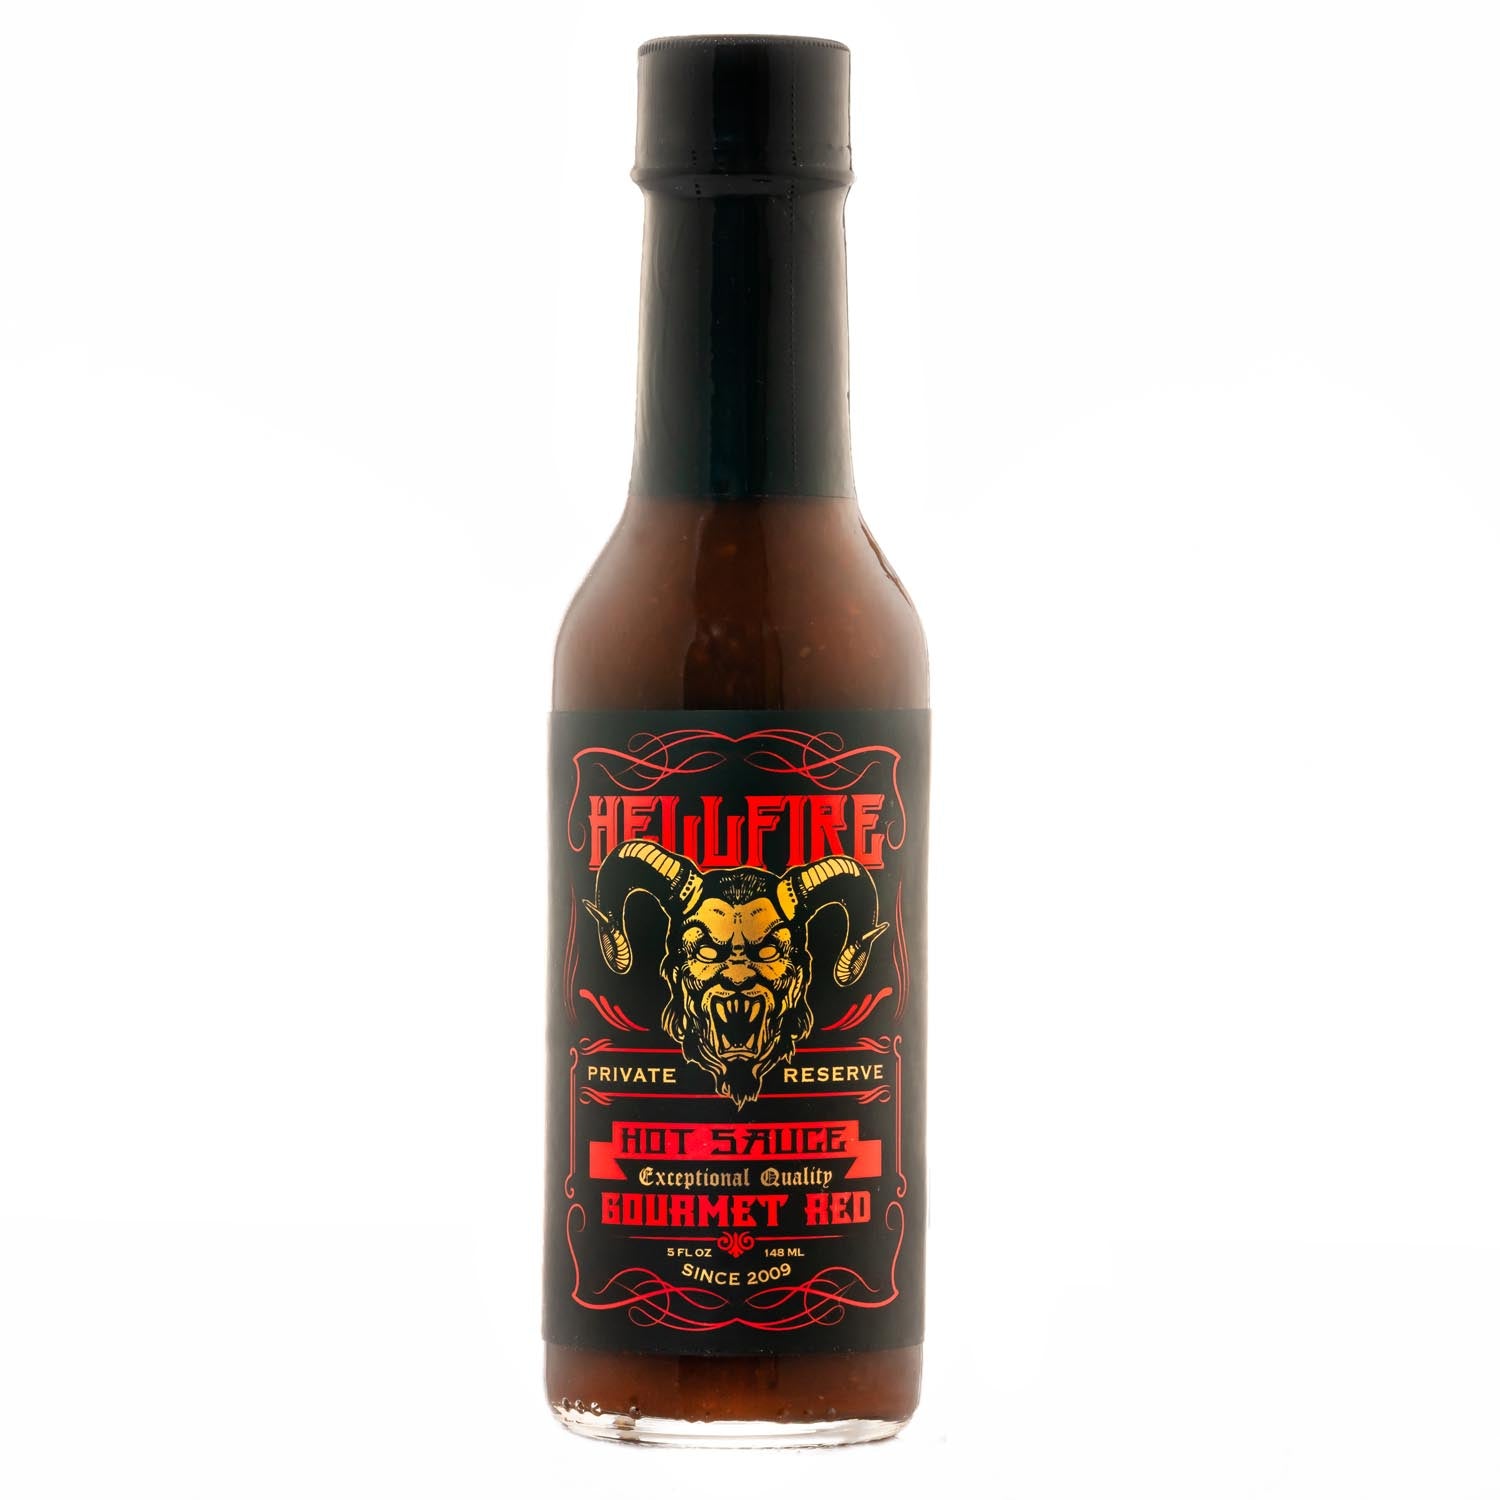 premium hot sauces piquantes hellfire detroit 